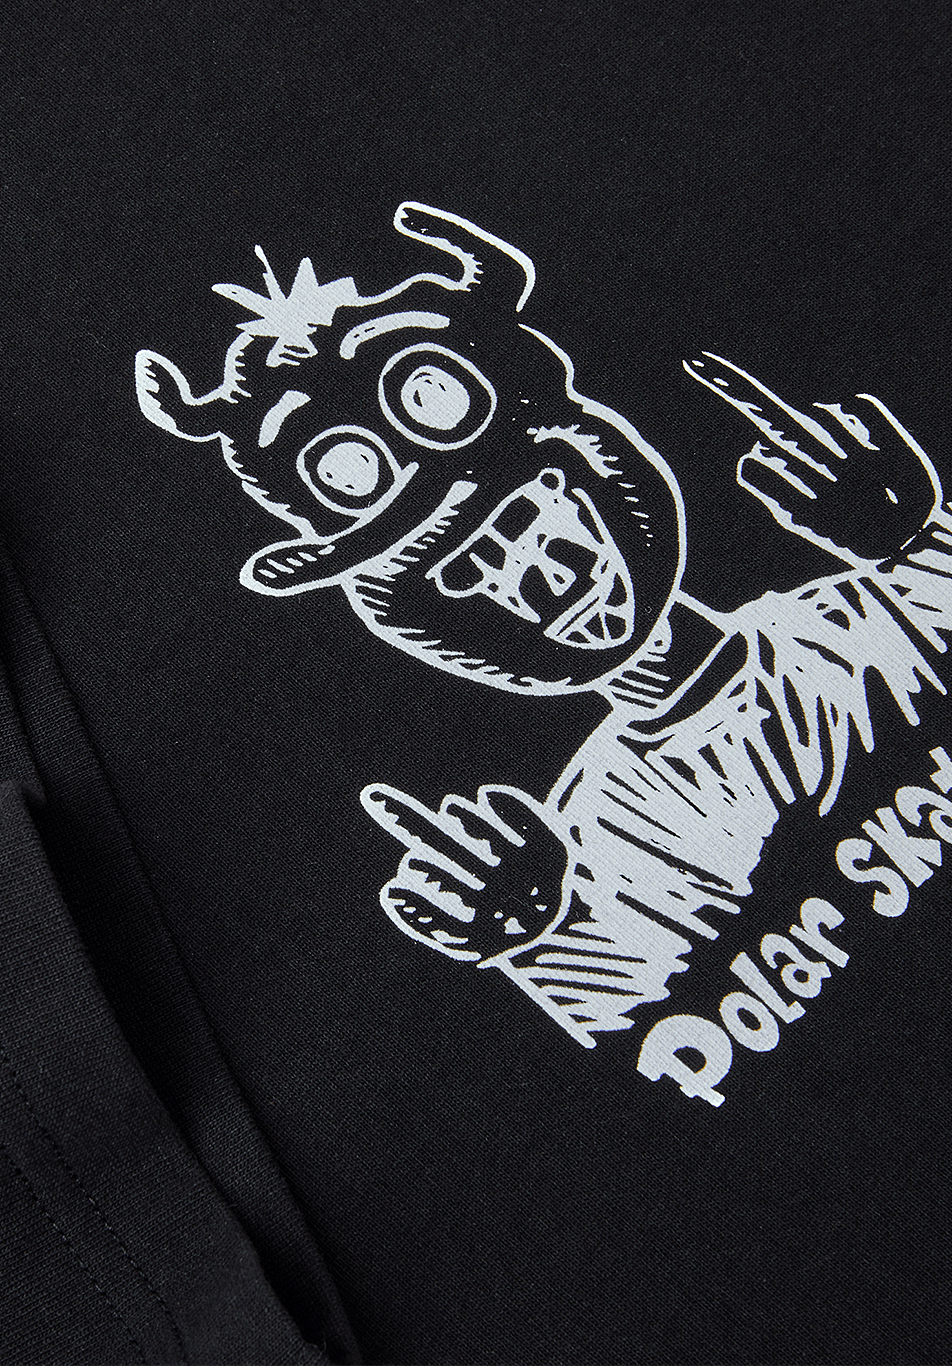 Polar Skate Co. Devil Man T-Shirt Schwarz